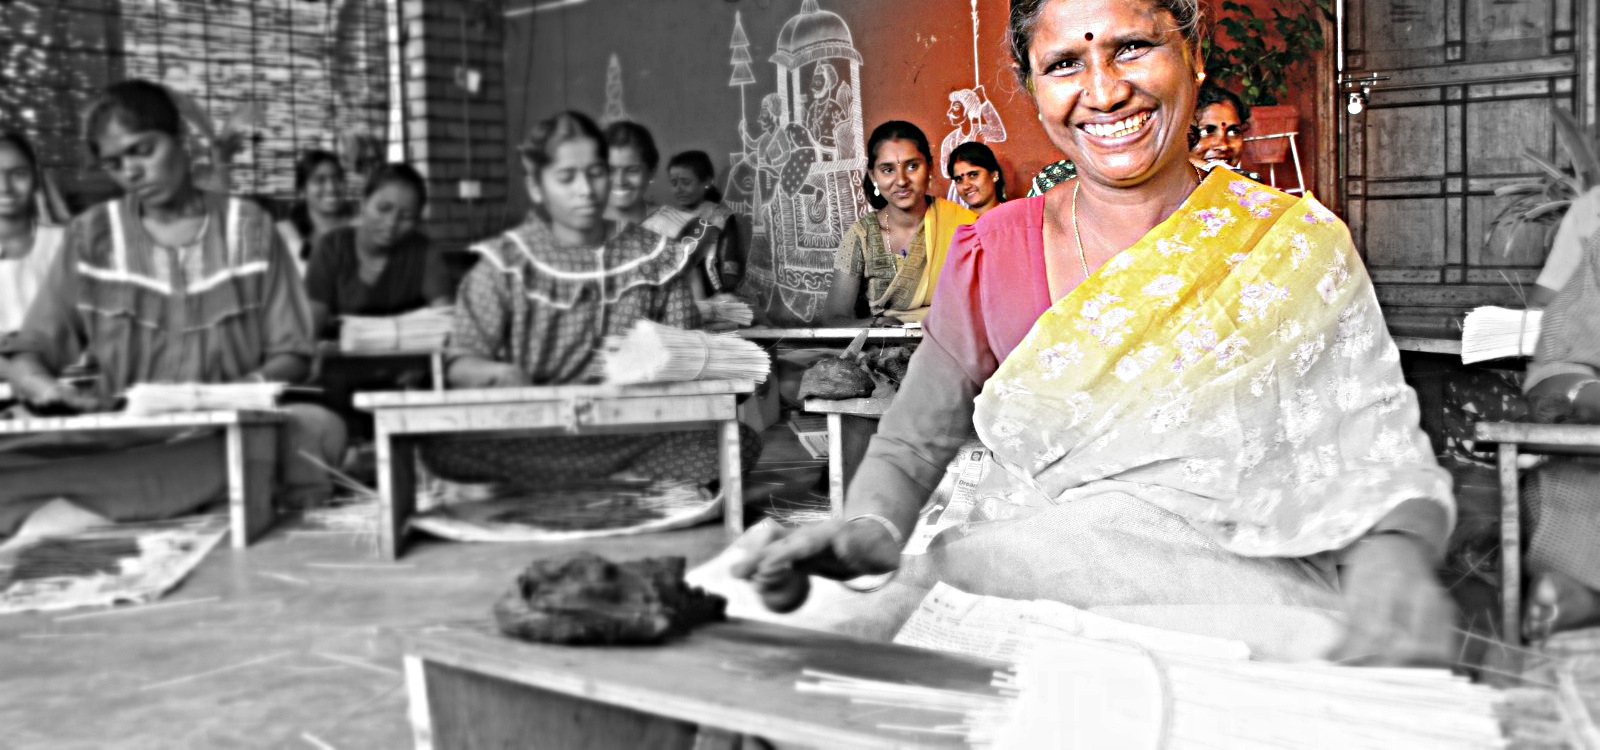 women entrepreneurship in rural india: some critical issues - sheatwork